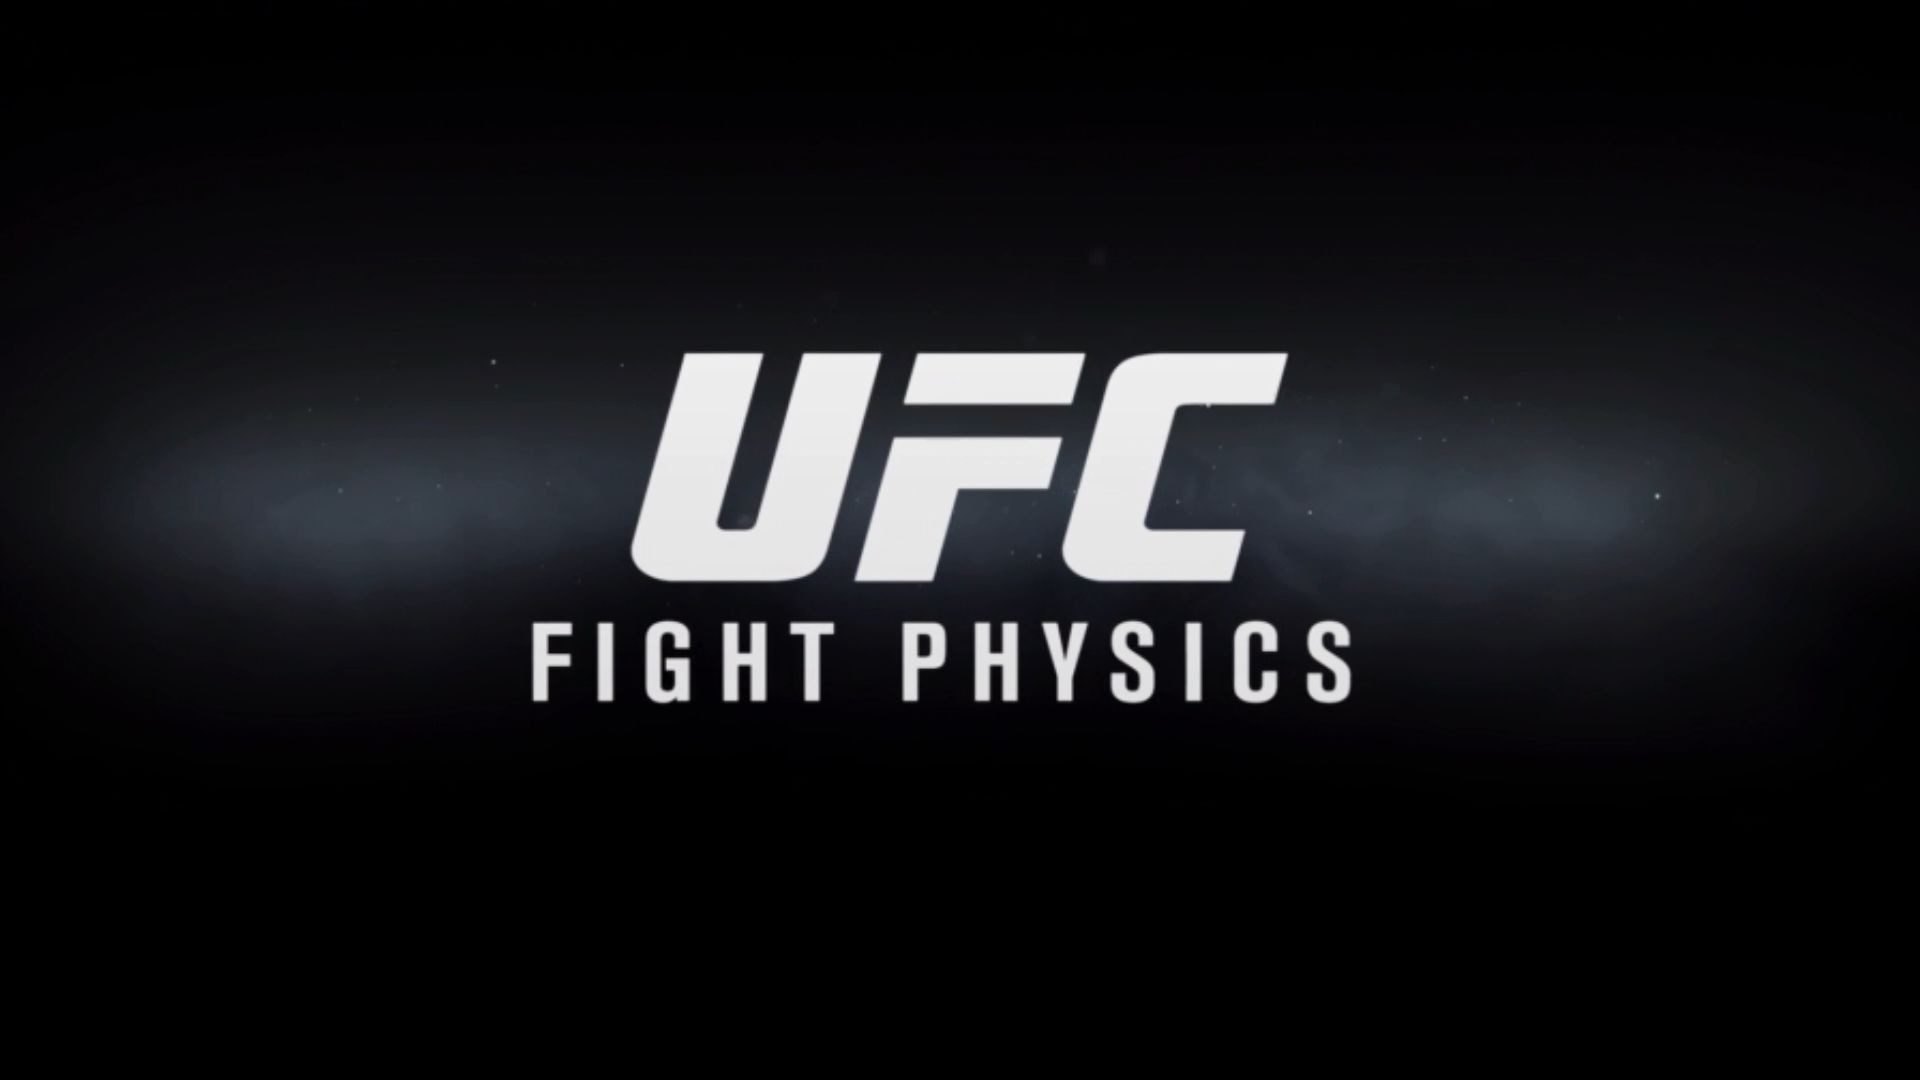 Show UFC Fight Physics